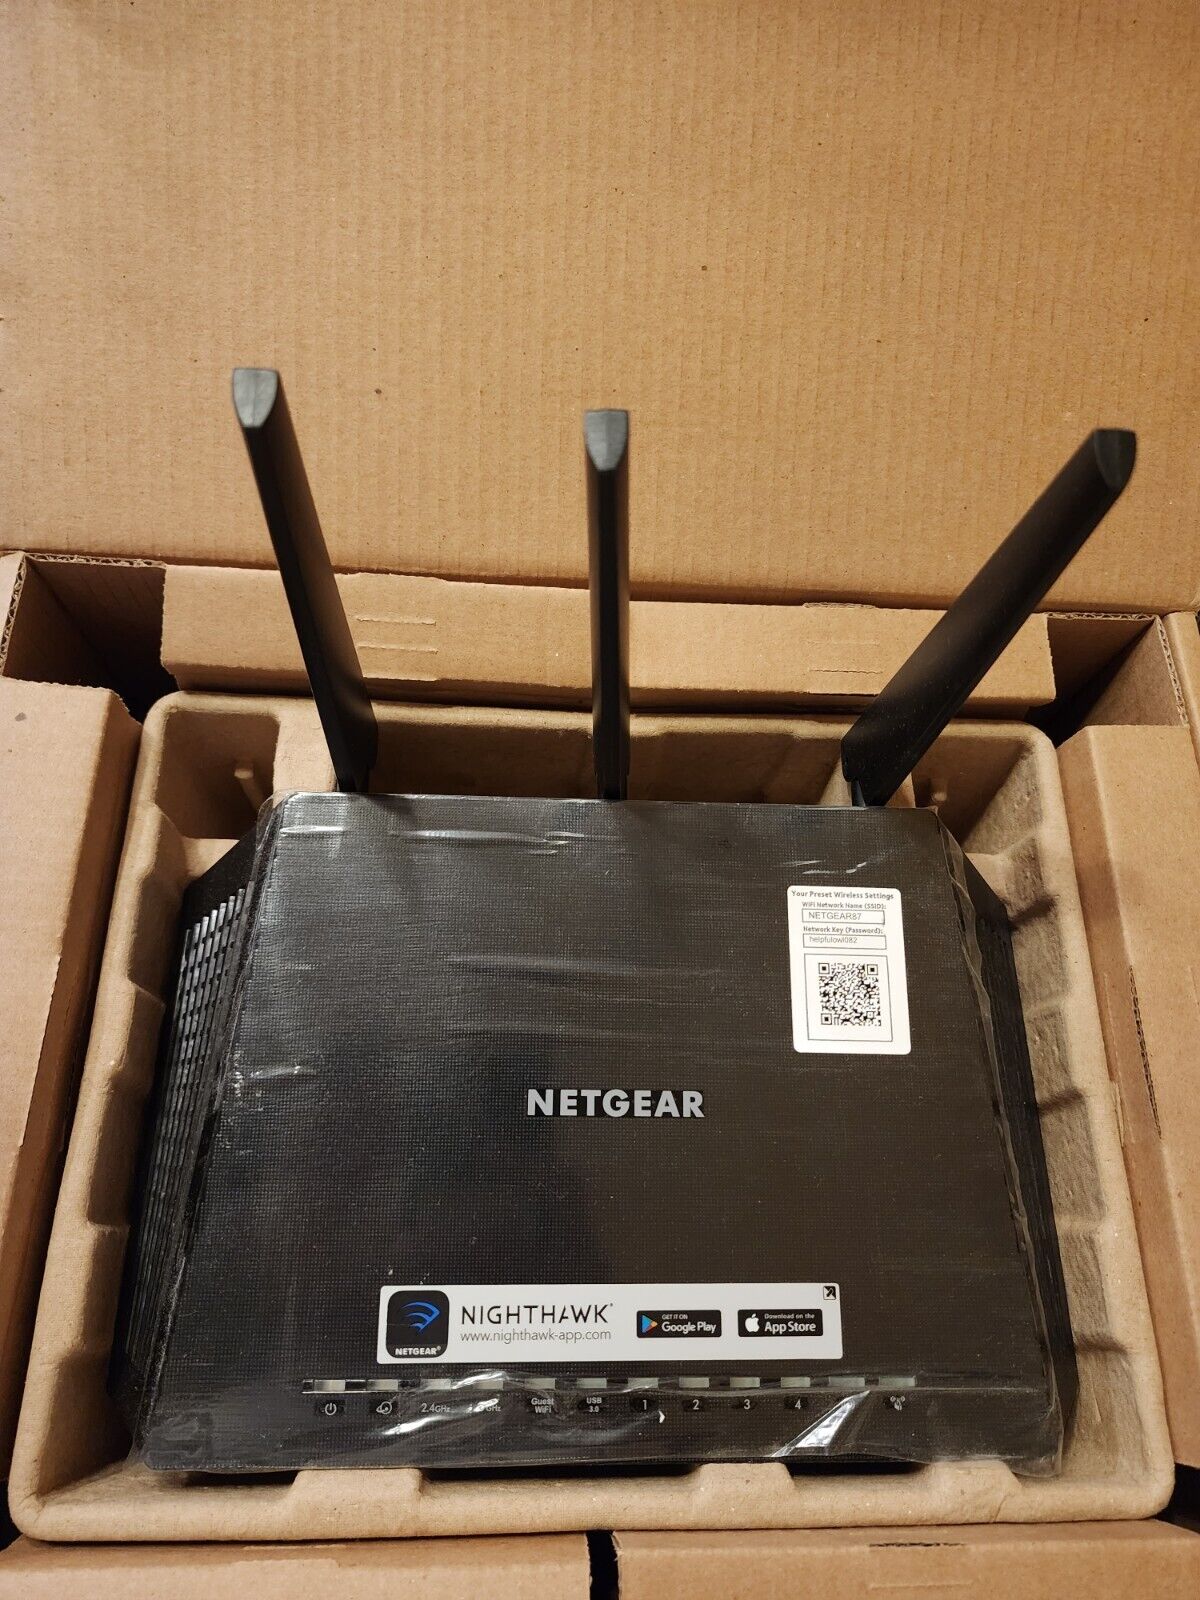 NETGEAR R6400-100NAR Smart WiFi Dual Band  AC1750 Router